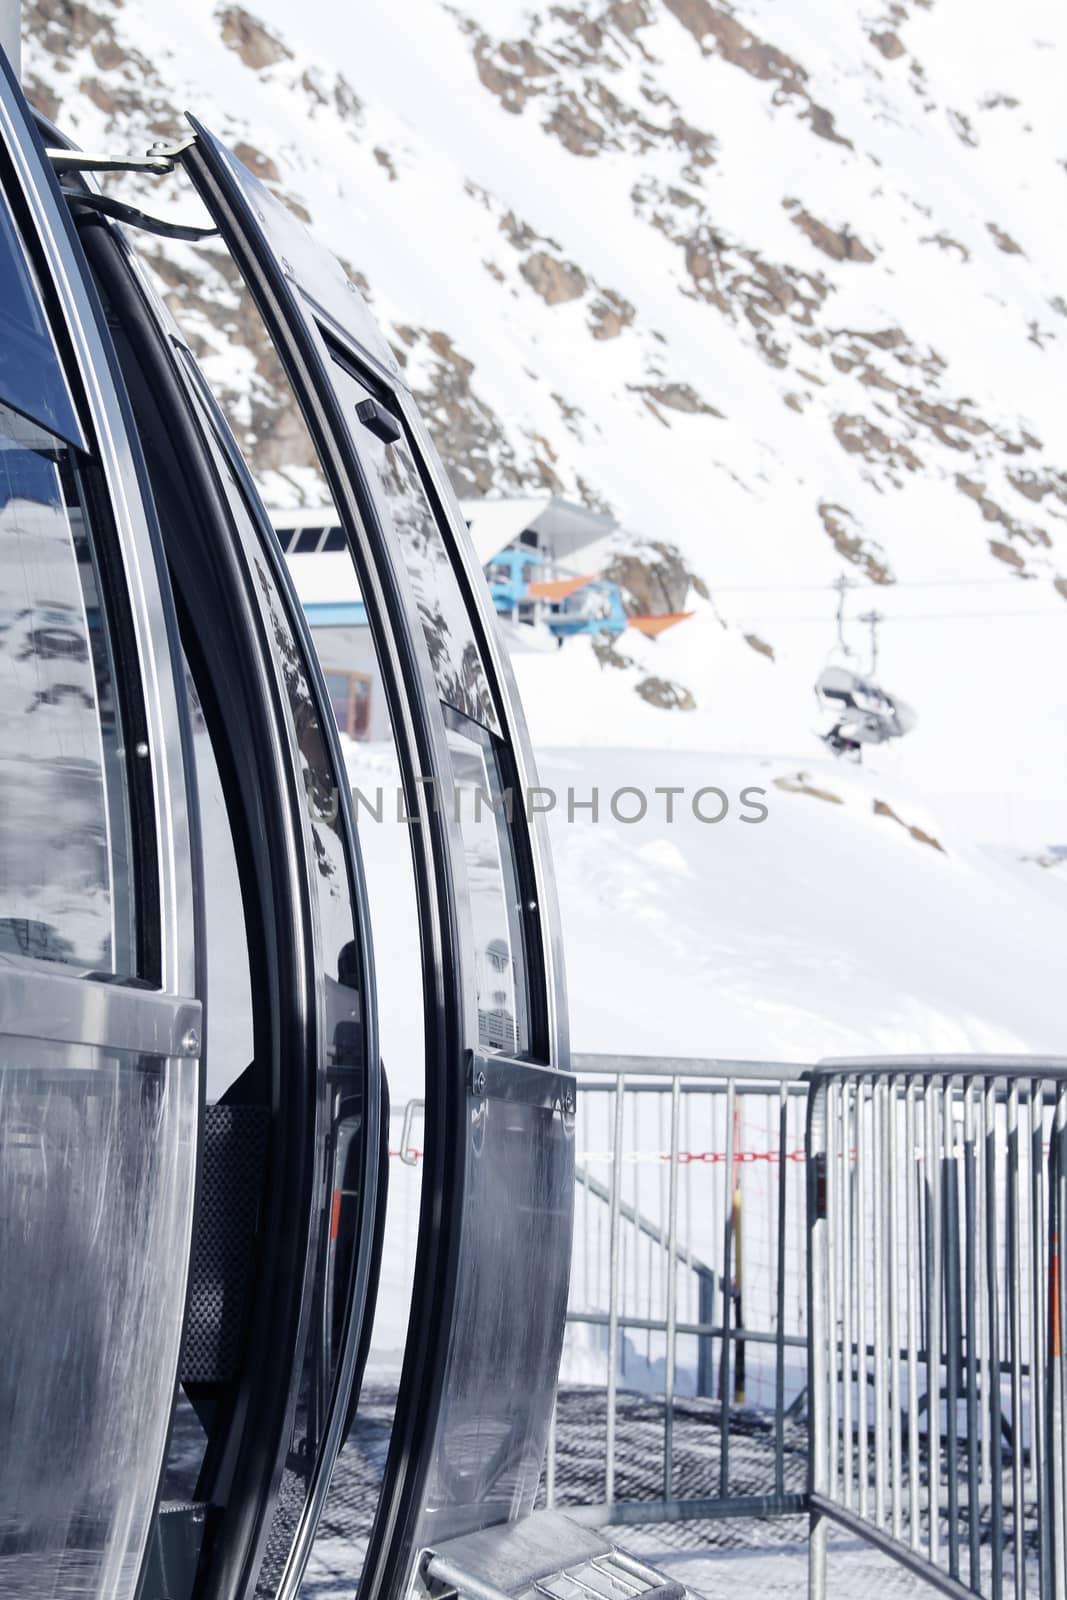 Ski lift cabin in high winter mountains in Solden, Austria